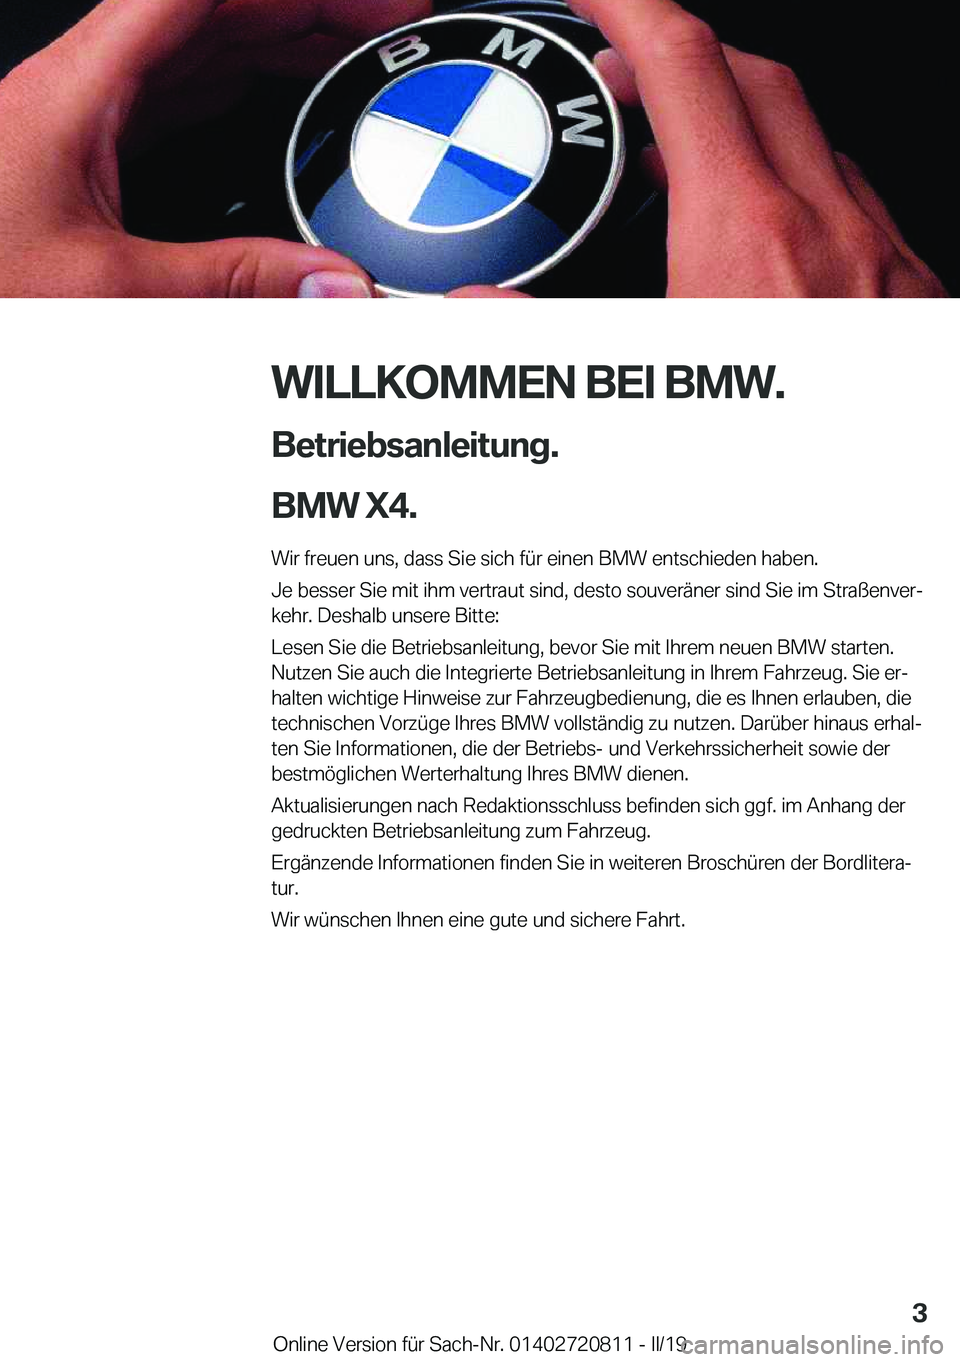 BMW X4 2019  Betriebsanleitungen (in German) �W�I�L�L�K�O�M�M�E�N��B�E�I��B�M�W�.�B�e�t�r�i�e�b�s�a�n�l�e�i�t�u�n�g�.
�B�M�W��X�4�. �W�i�r��f�r�e�u�e�n��u�n�s�,��d�a�s�s��S�i�e��s�i�c�h��f�